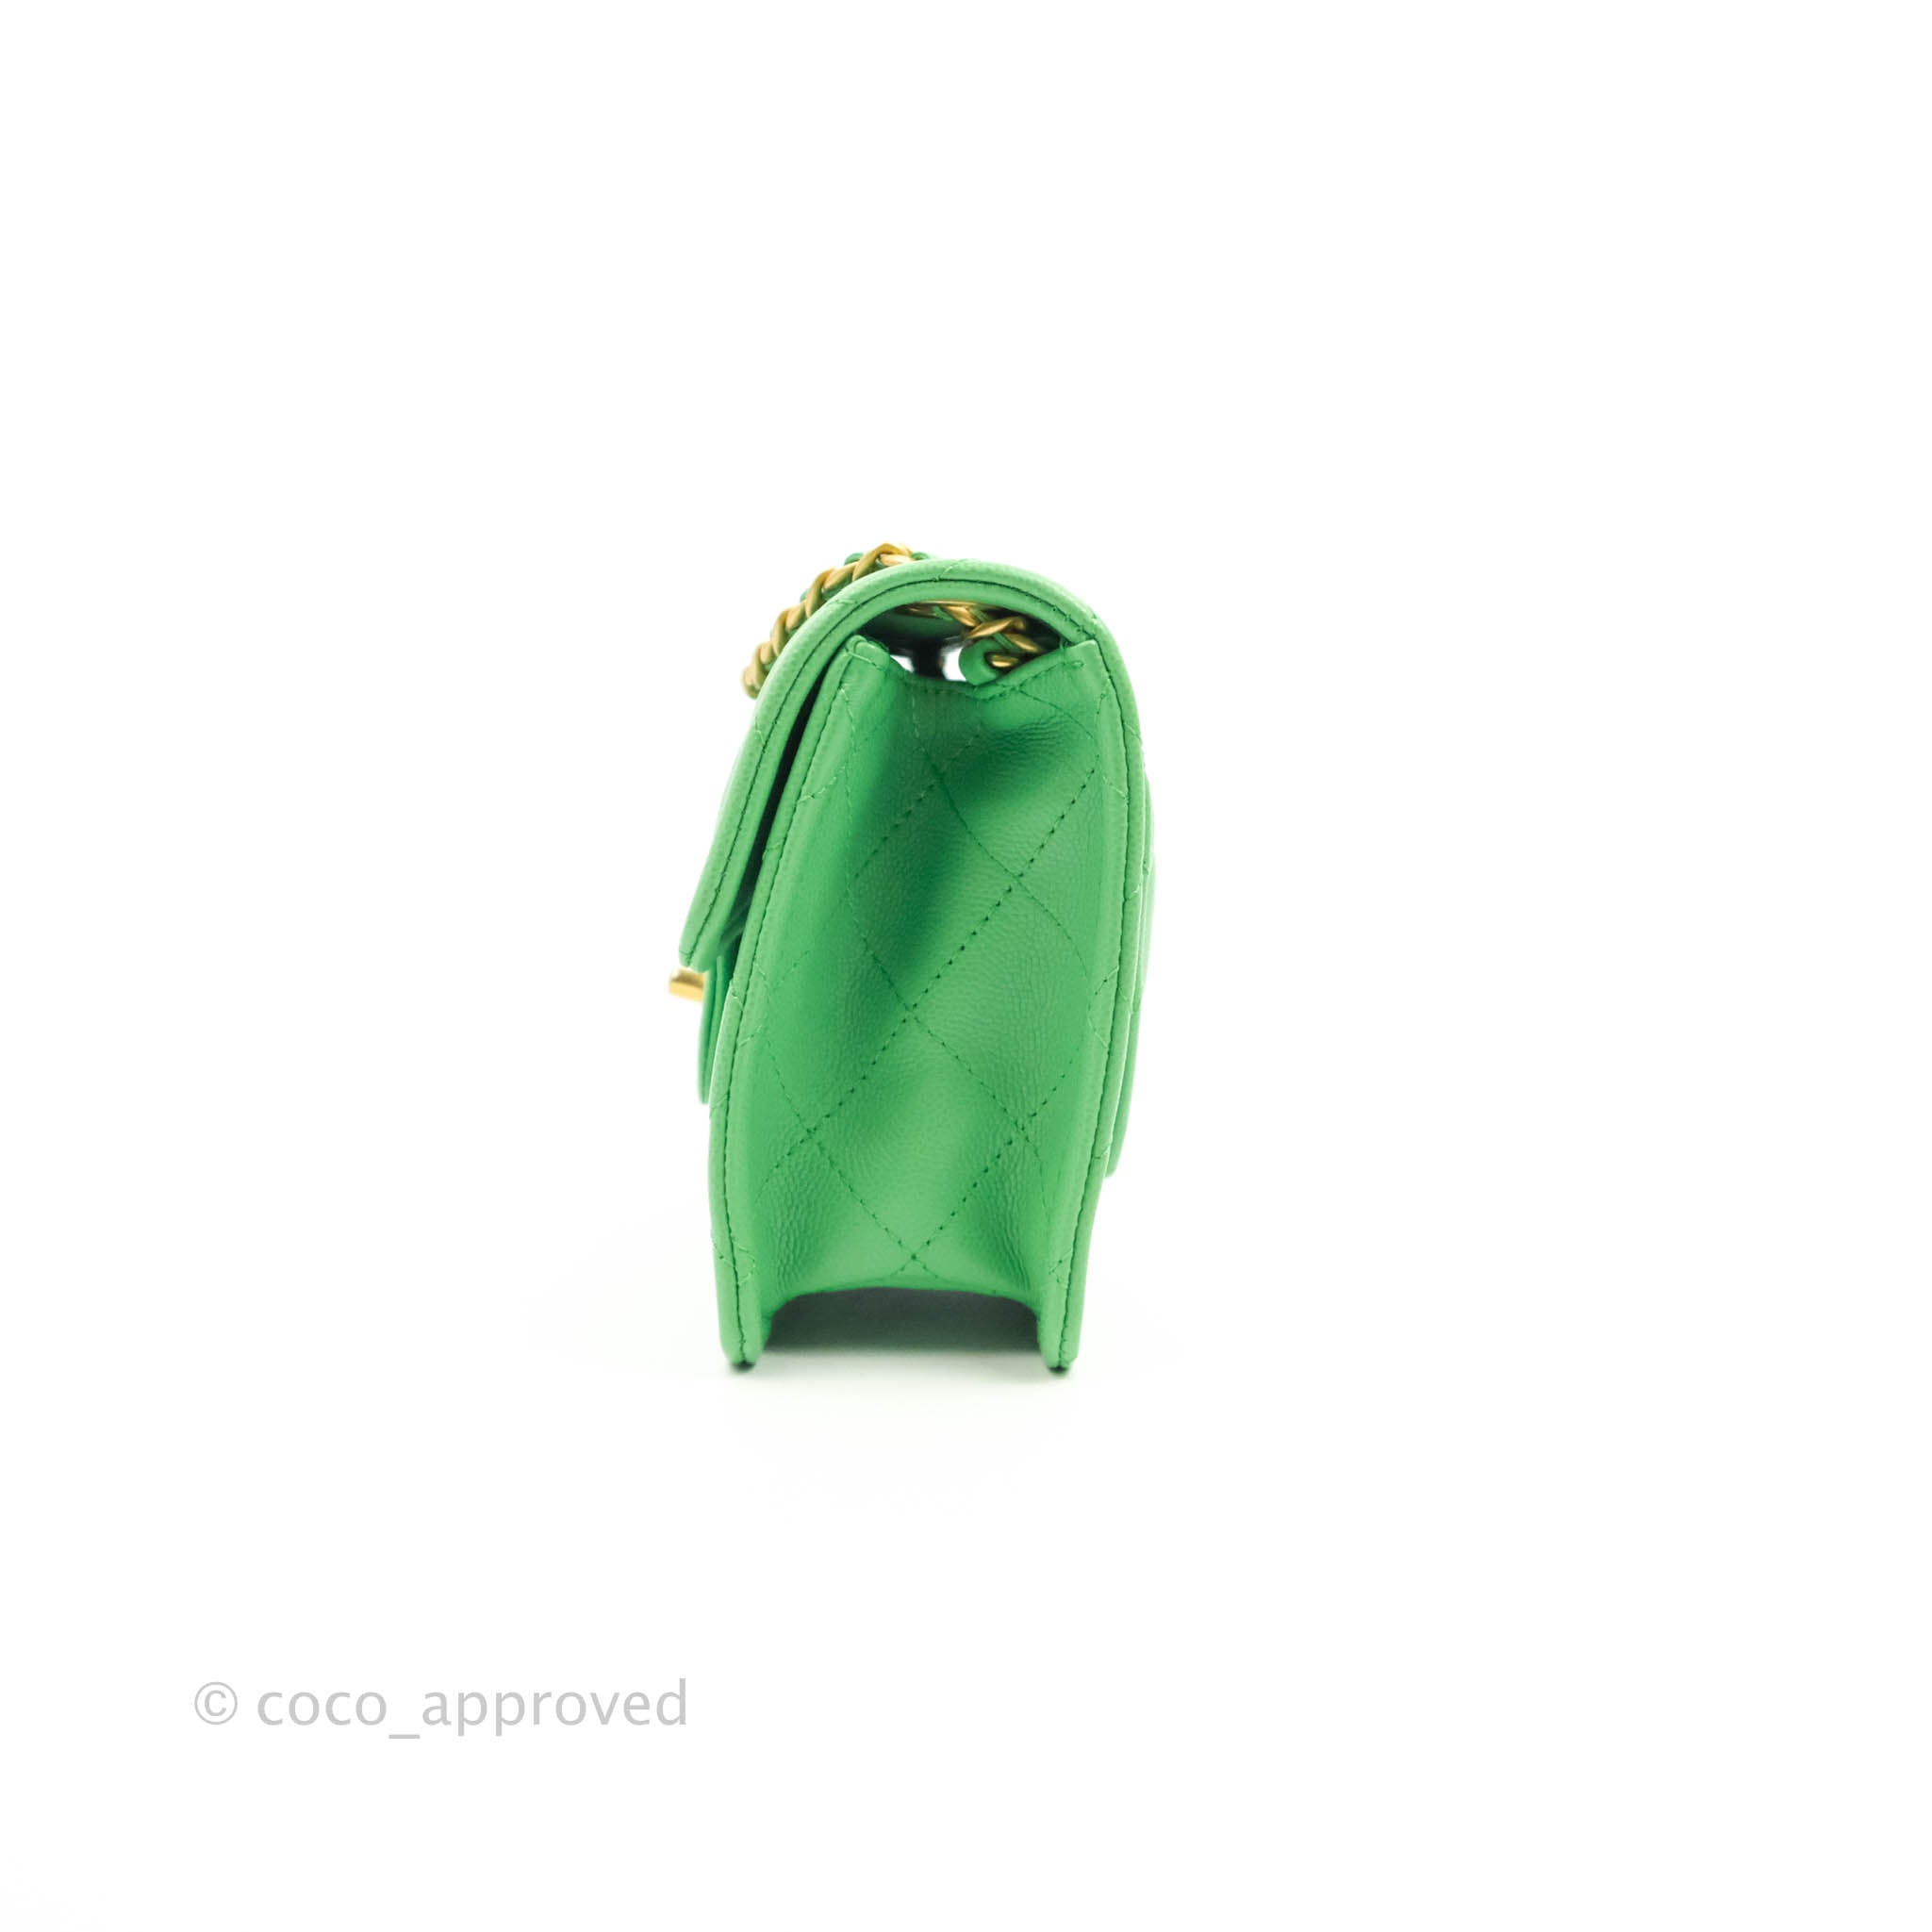 Chanel Mini Flap Bag AS4056 B12969 NO197, Green, One Size